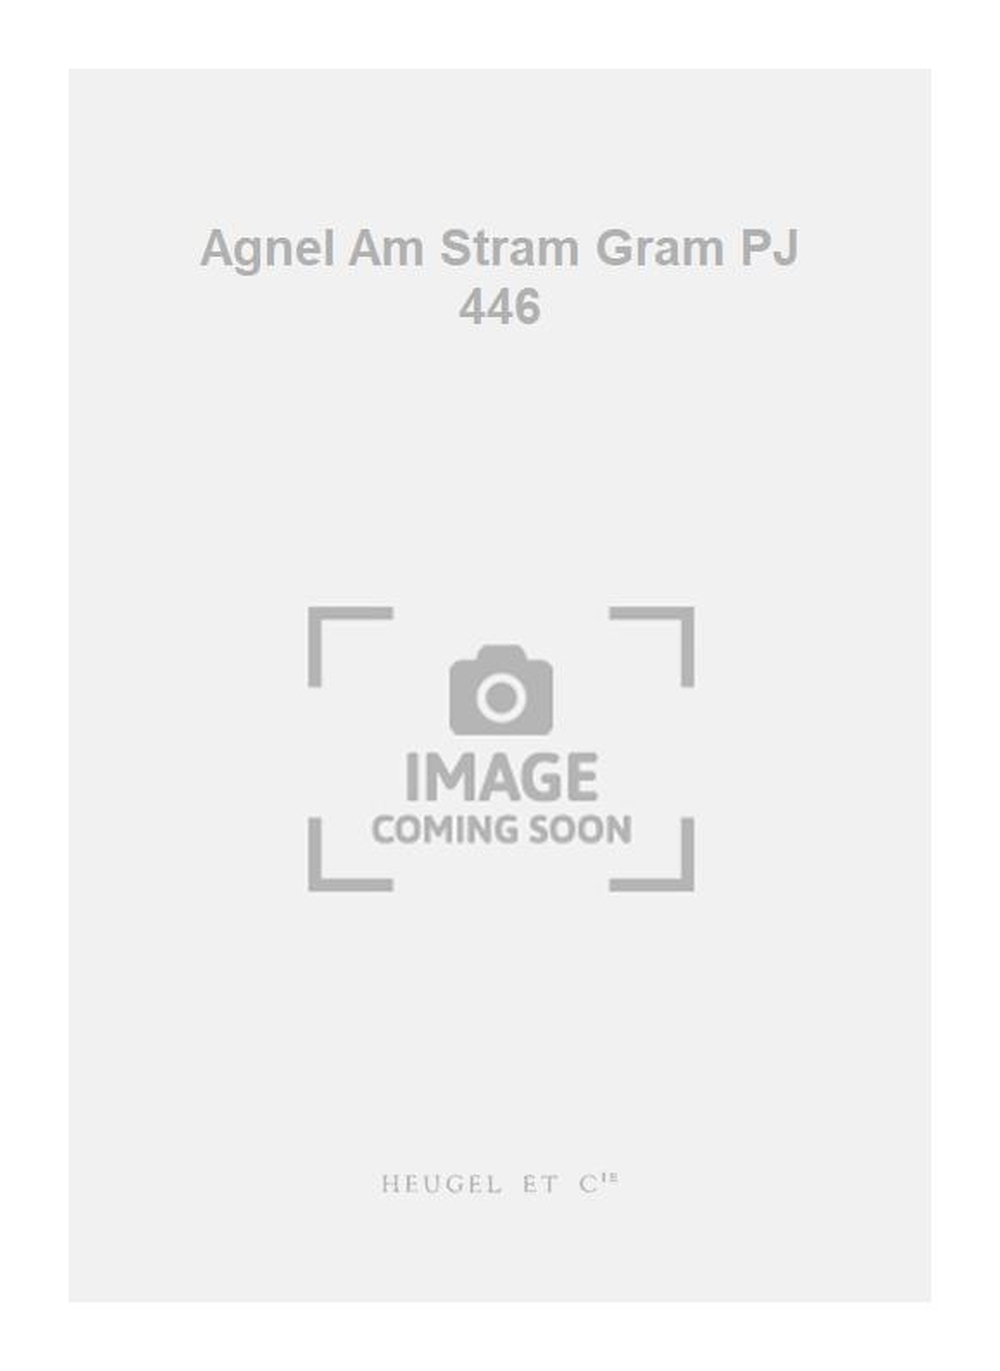 Aime Agnel: Agnel Am Stram Gram PJ 446